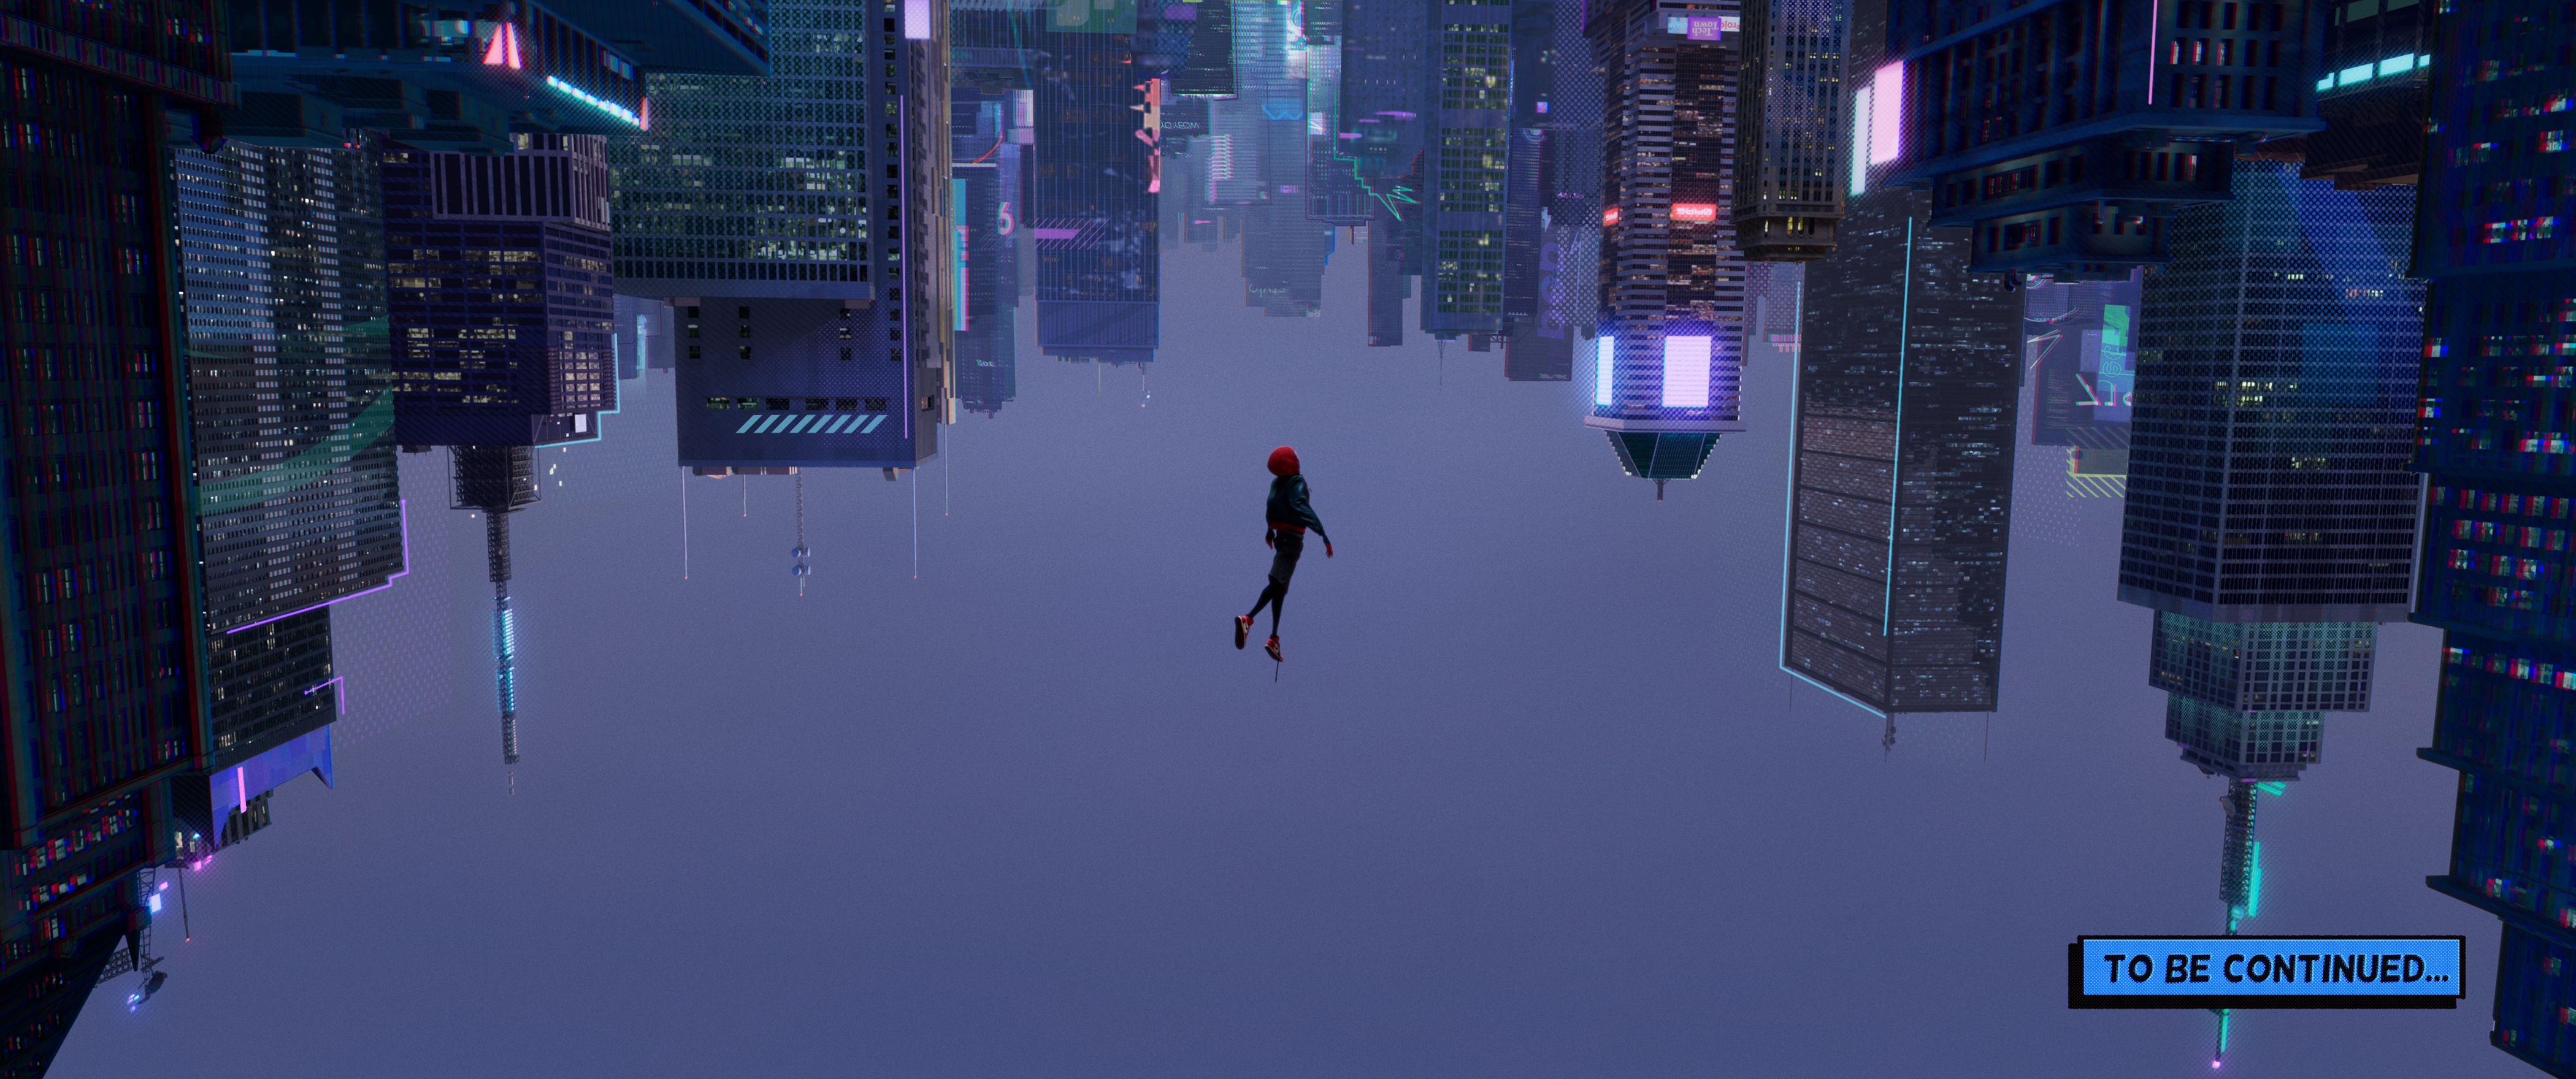 Animated Spider-Man Movie photo Into the Spider-Verse